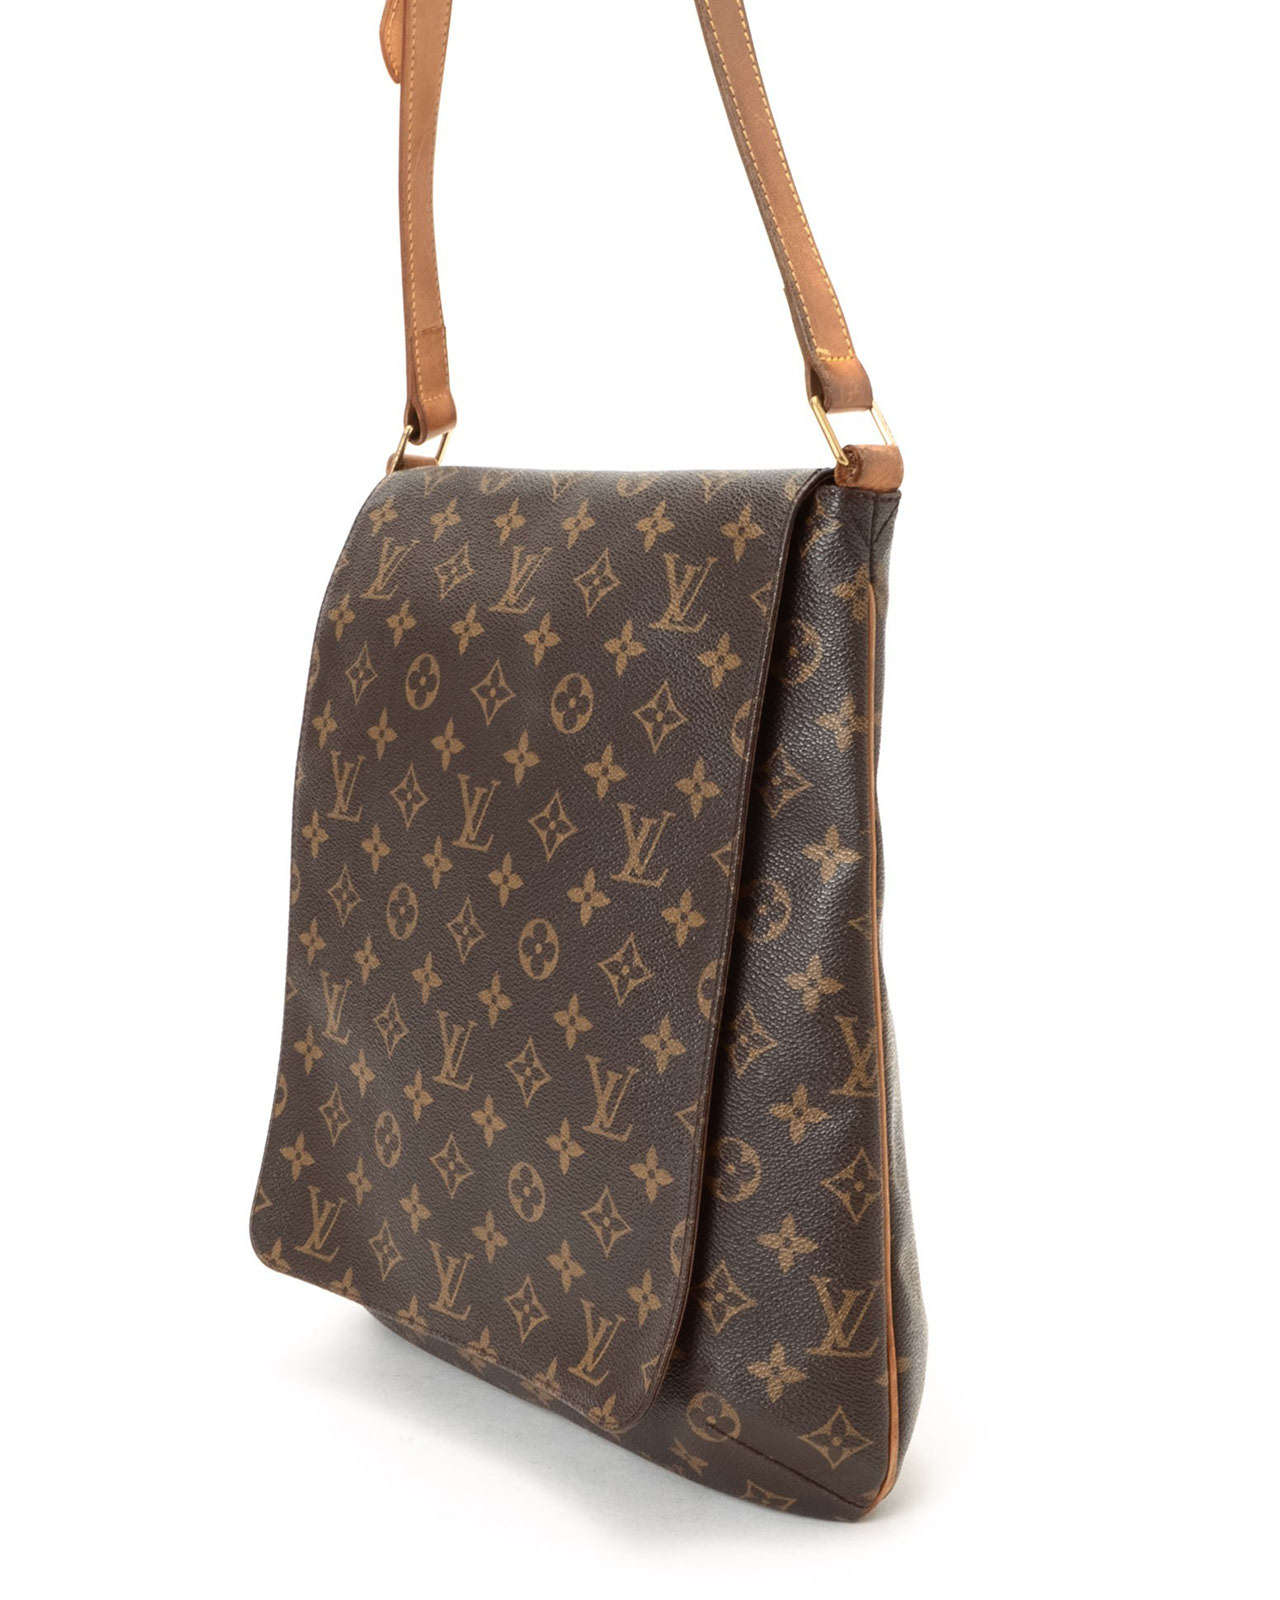 Lyst - Louis Vuitton Musette Shoulder Bag in Brown